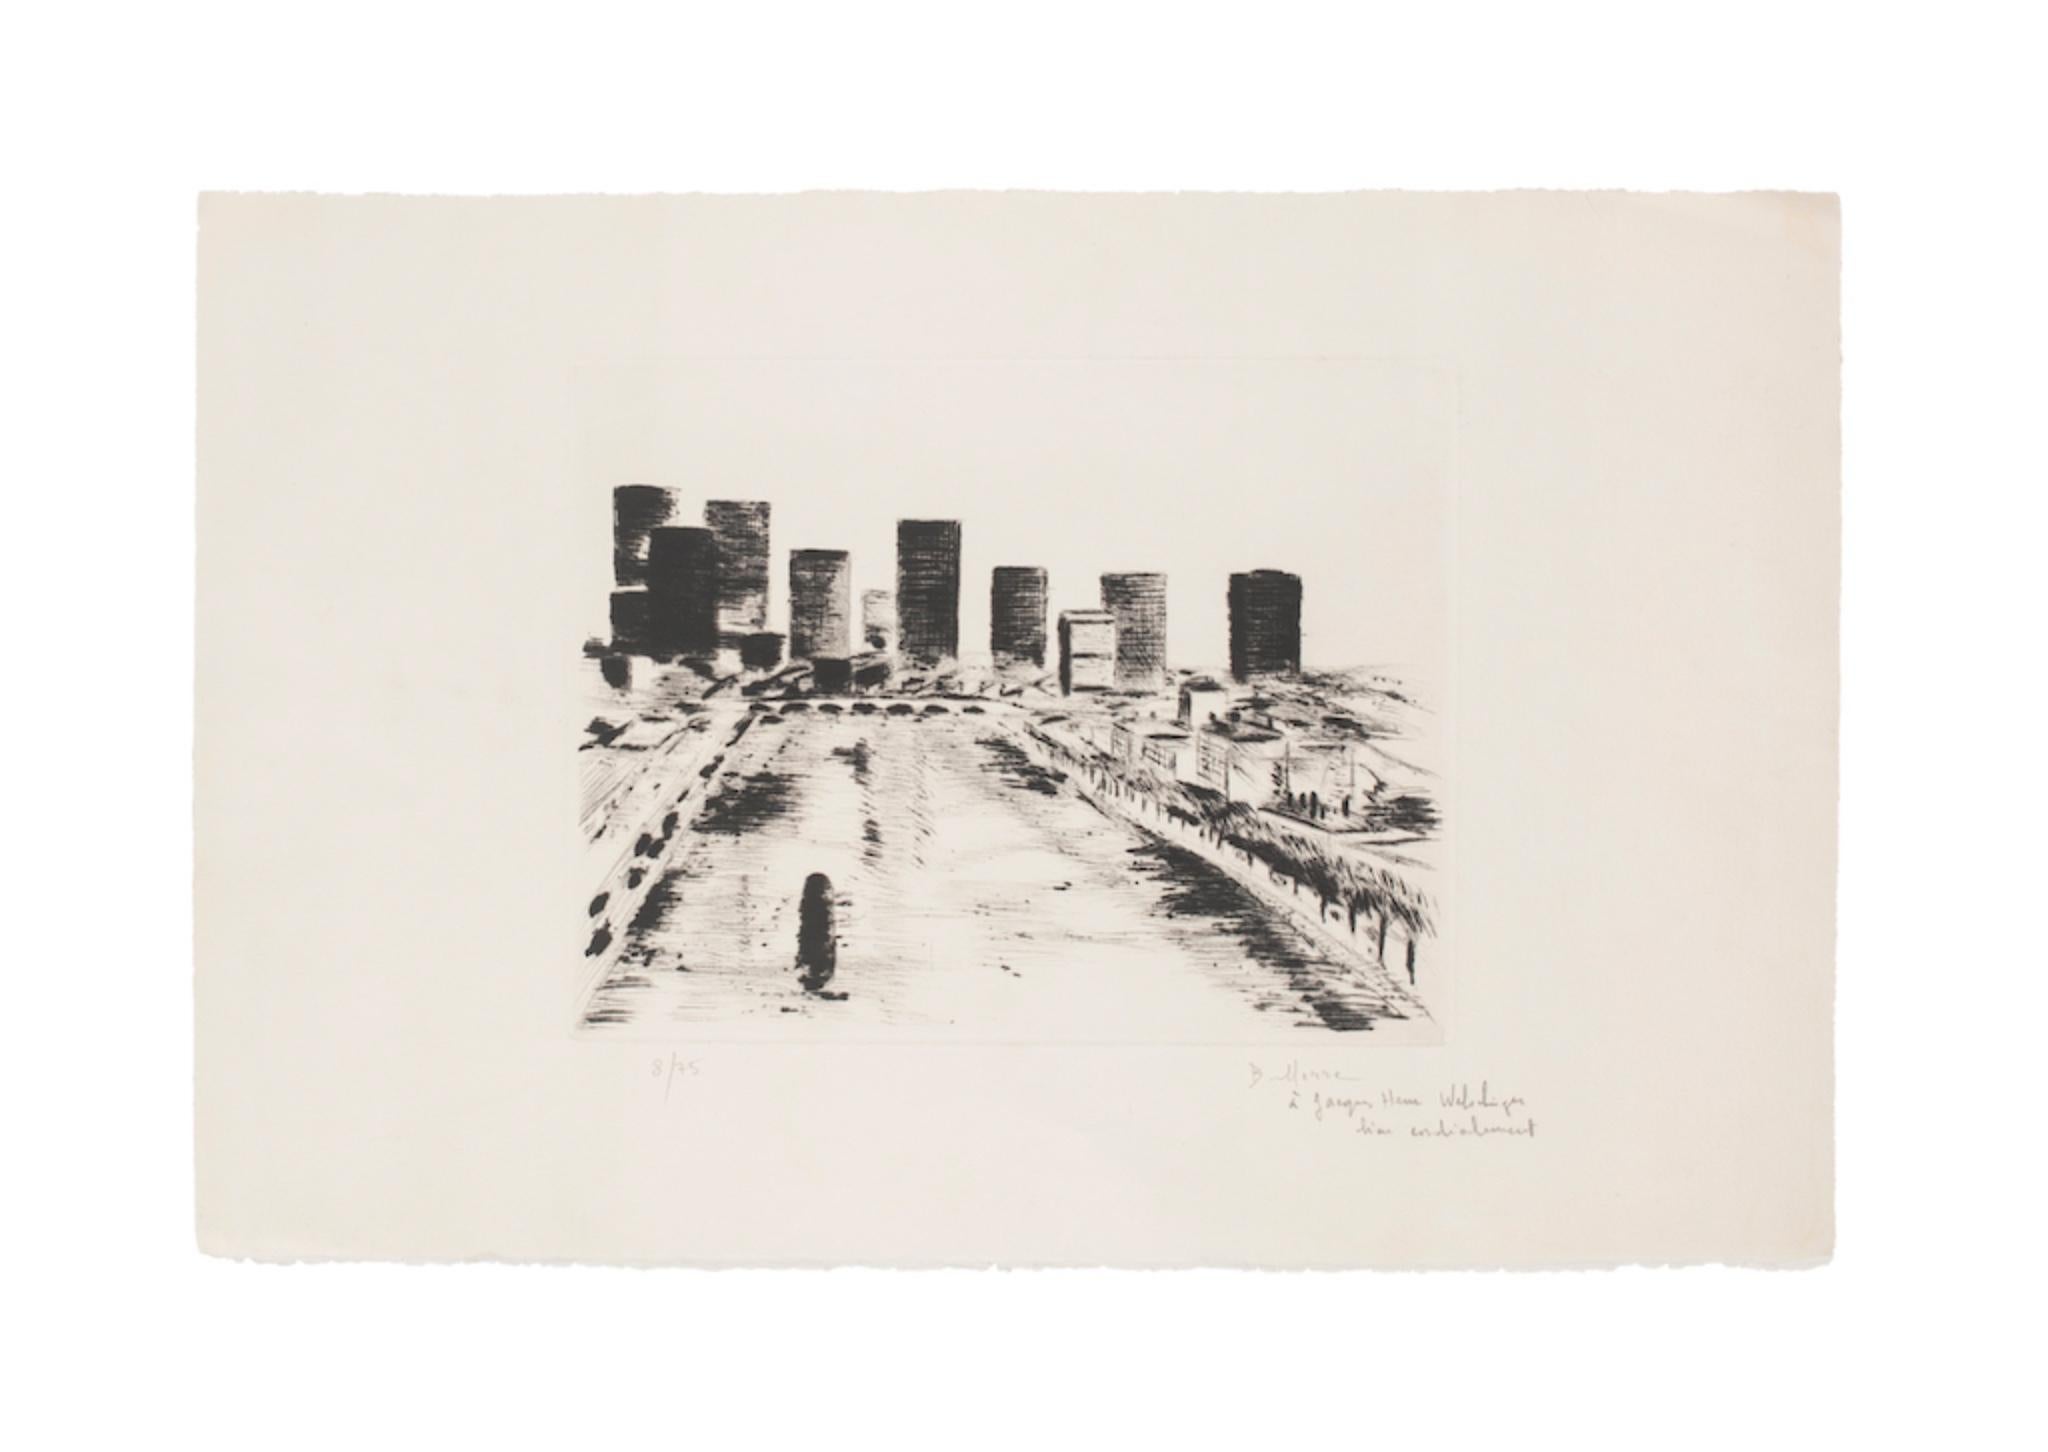 Unknown Landscape Print - Cityscape - Original Etching signed "Marra" - 20th century